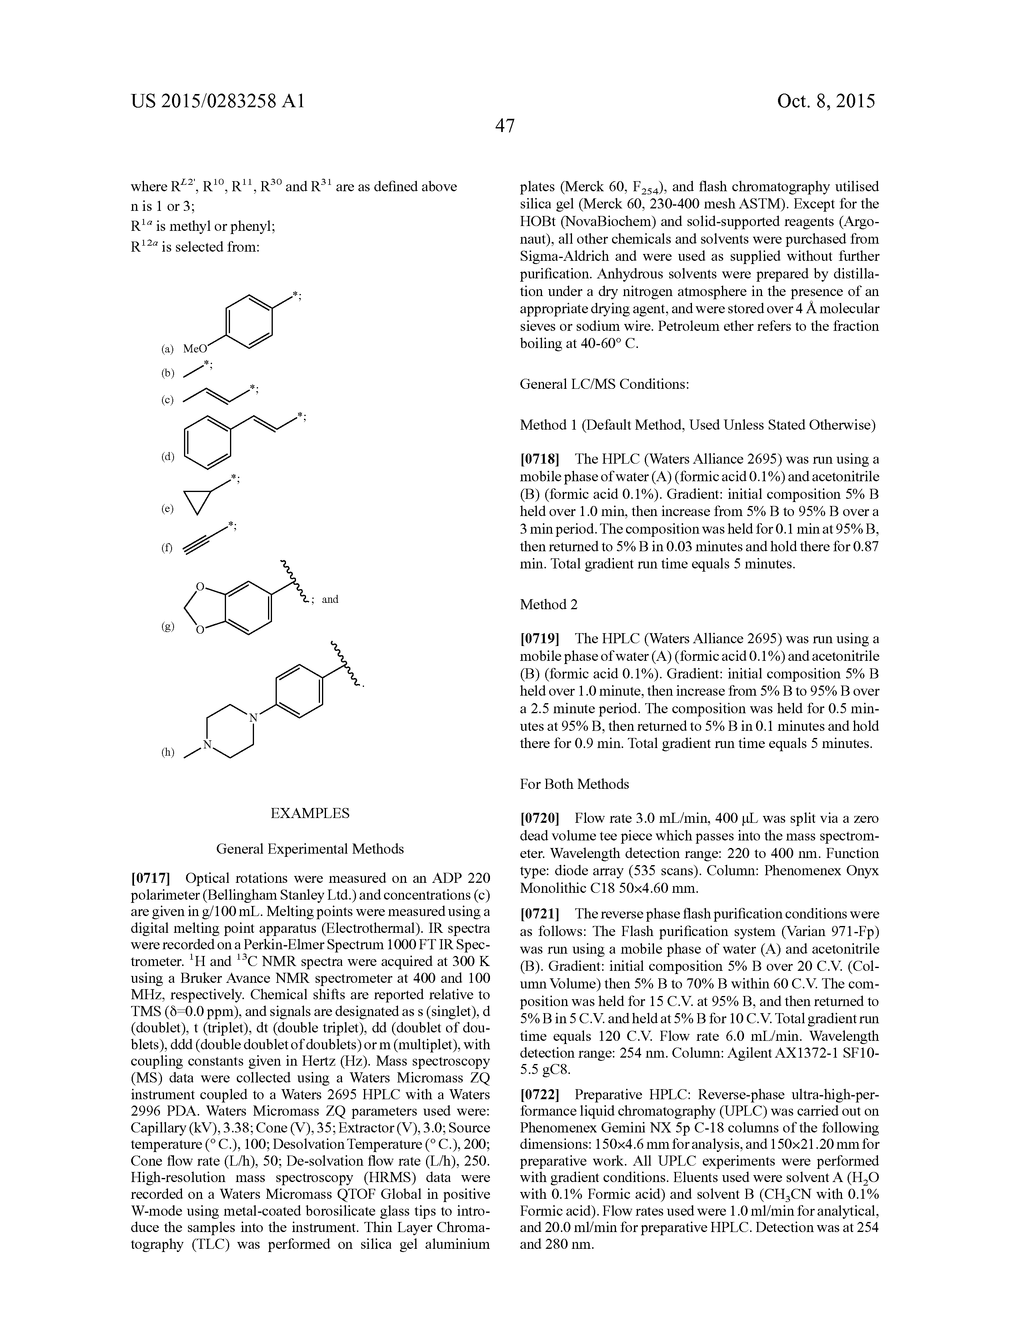 PYRROLOBENZODIAZEPINE - ANTI-PSMA ANTIBODY CONJUGATES - diagram, schematic, and image 51